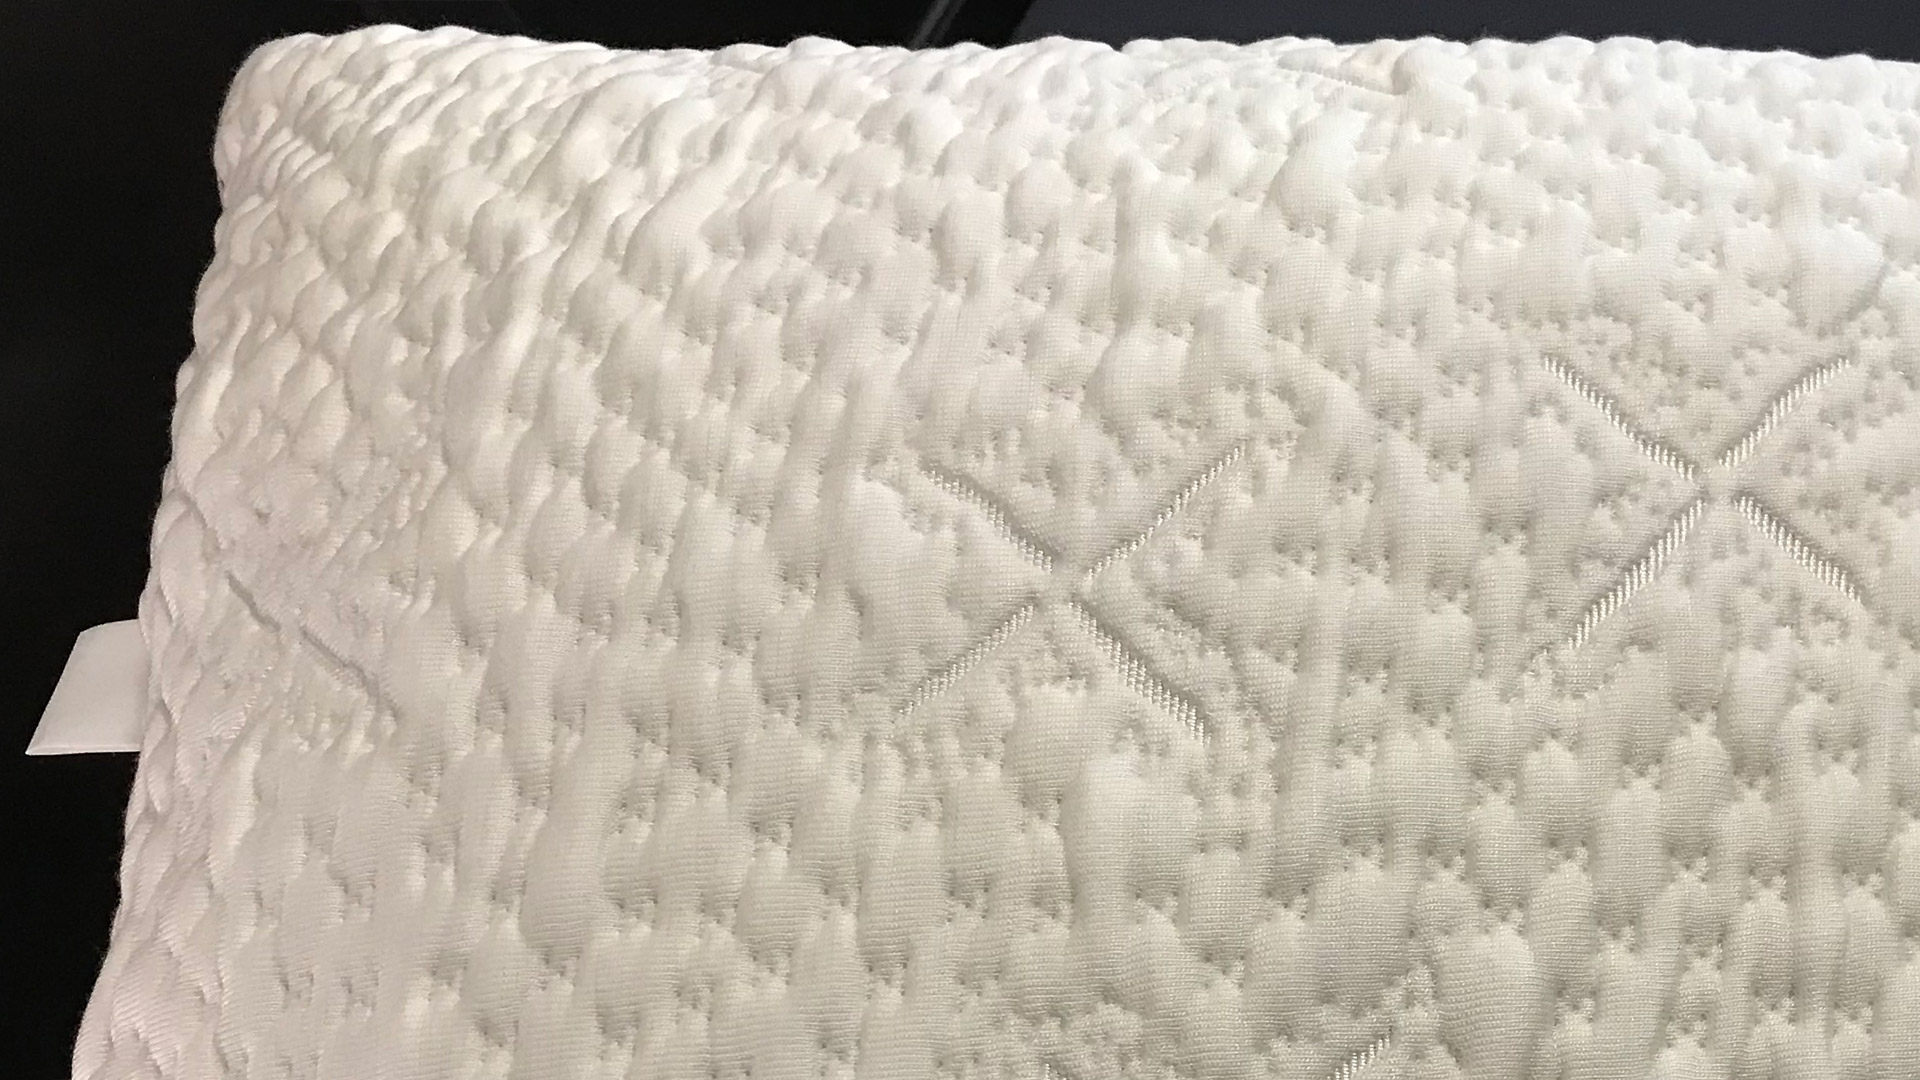 Close up of the Sleep Number ComfortFit Pillow